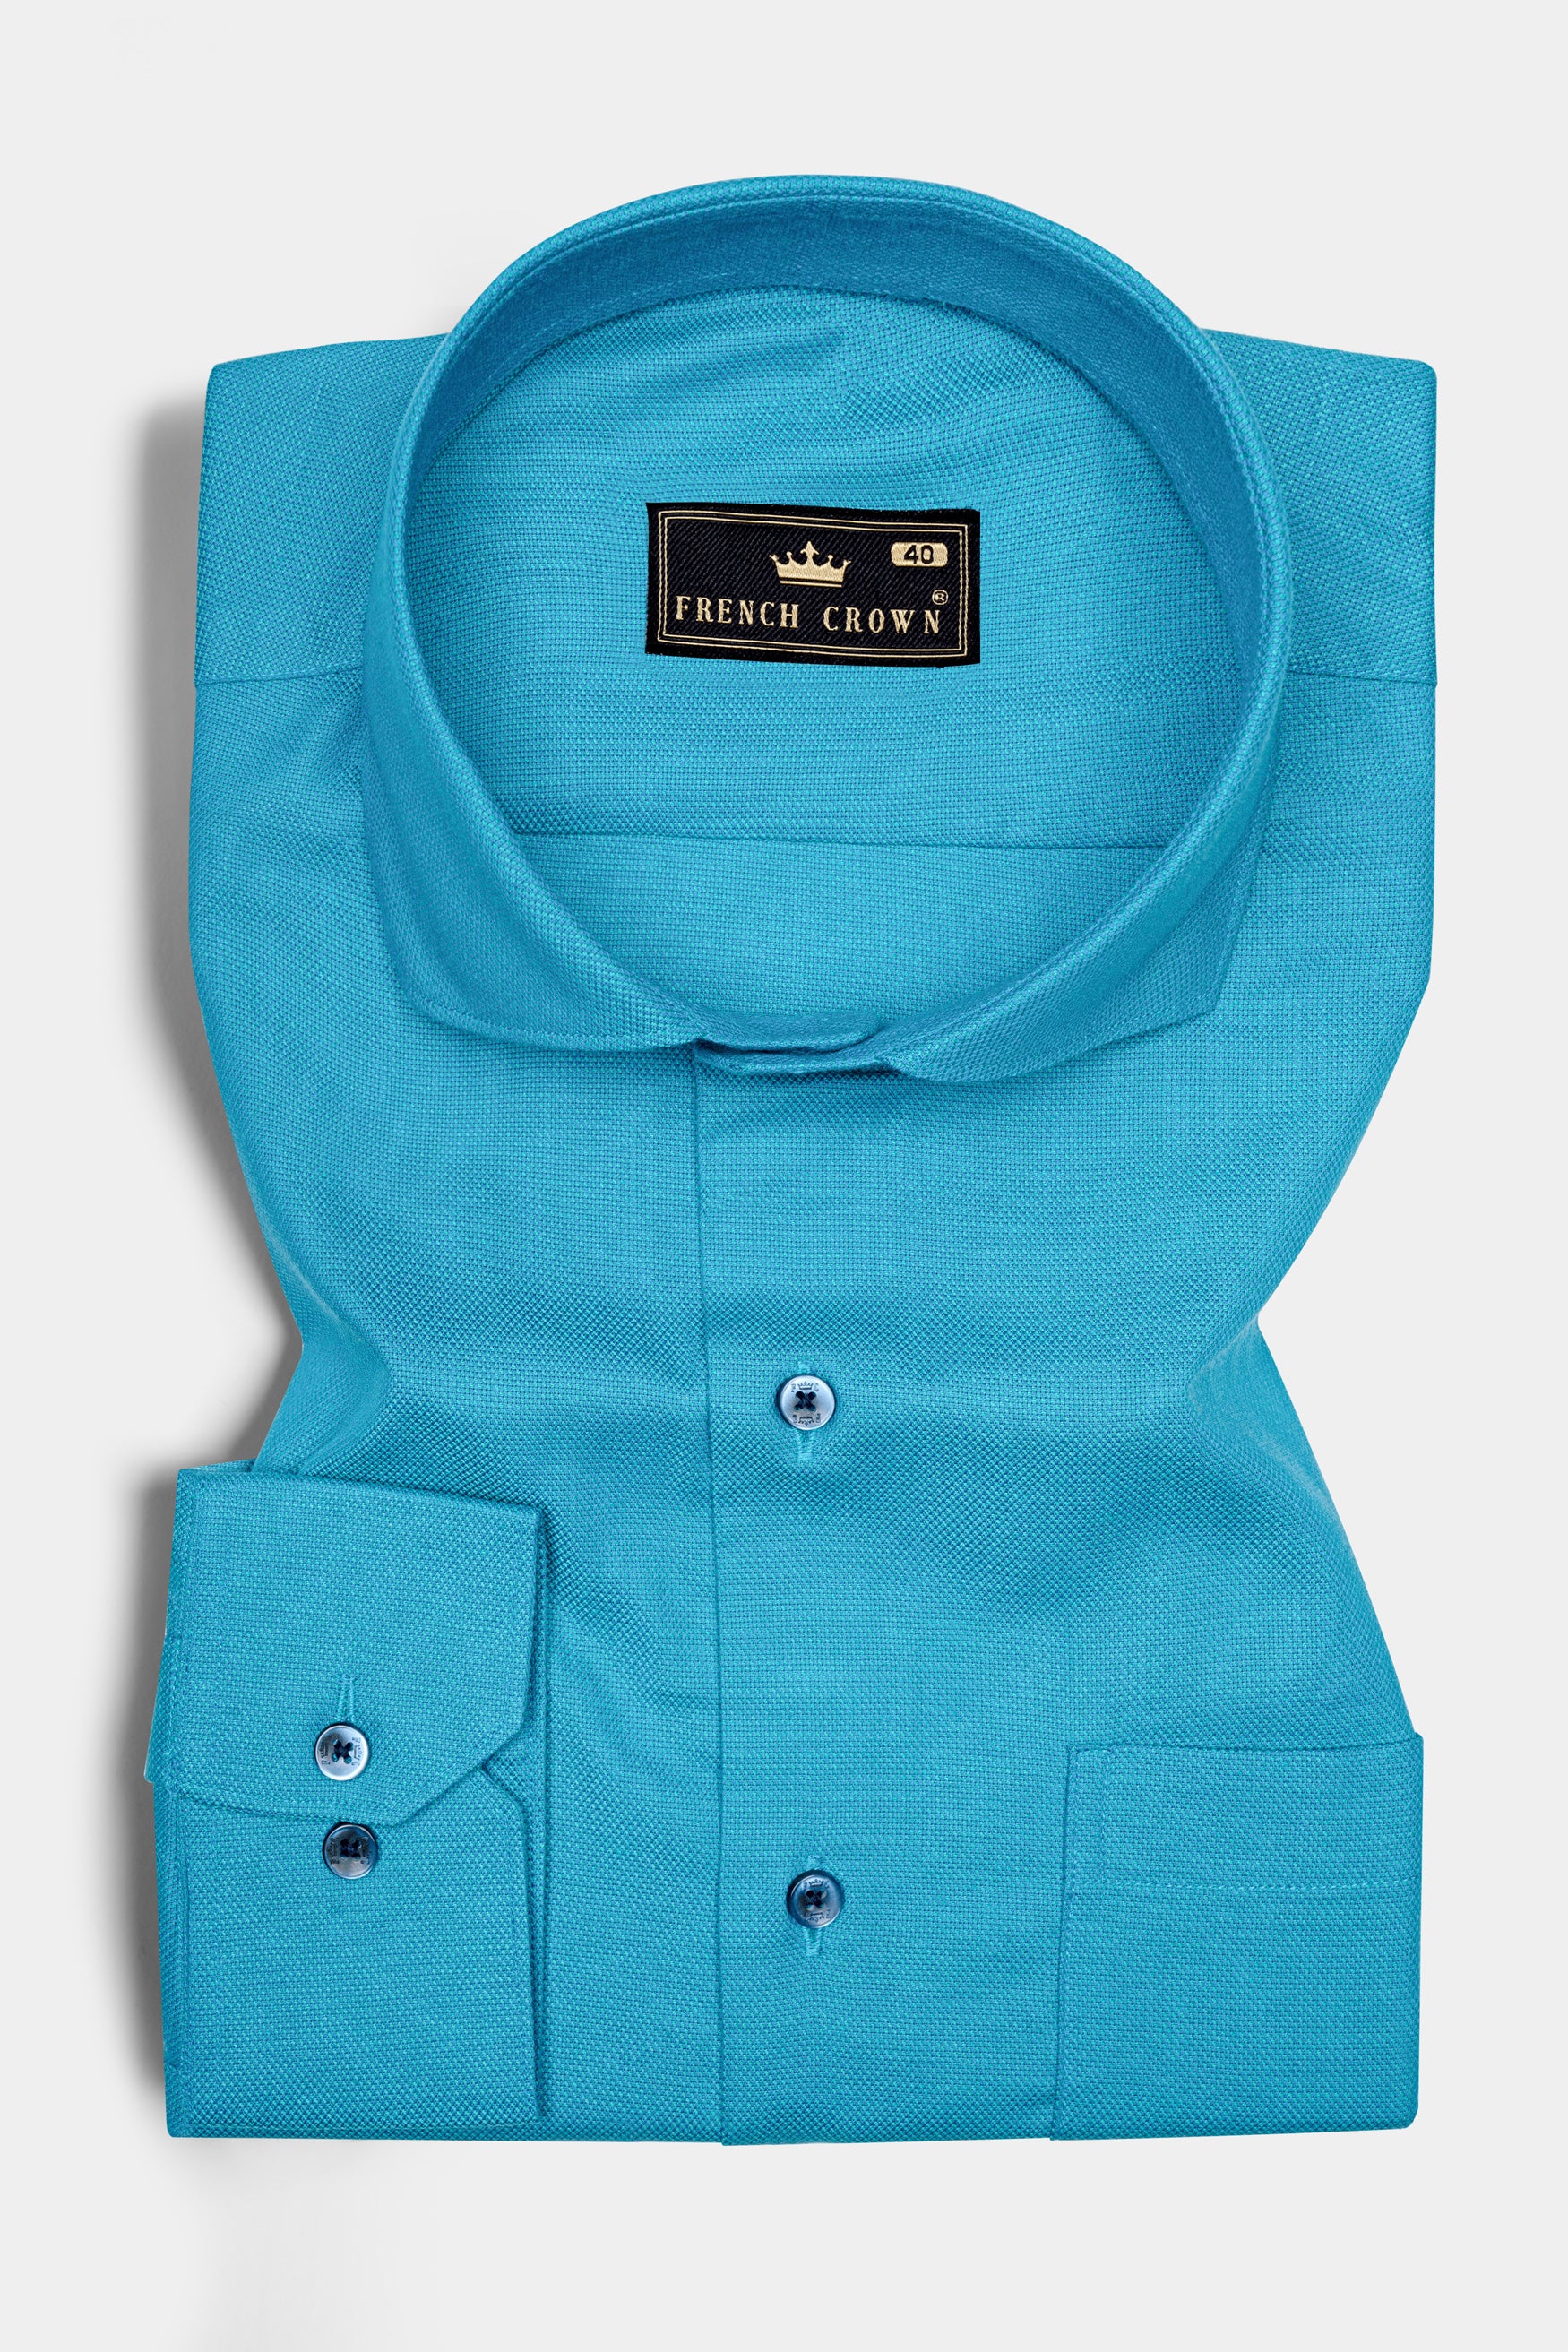 Pacific Ocean Blue Dobby Textured Premium Cotton Shirt